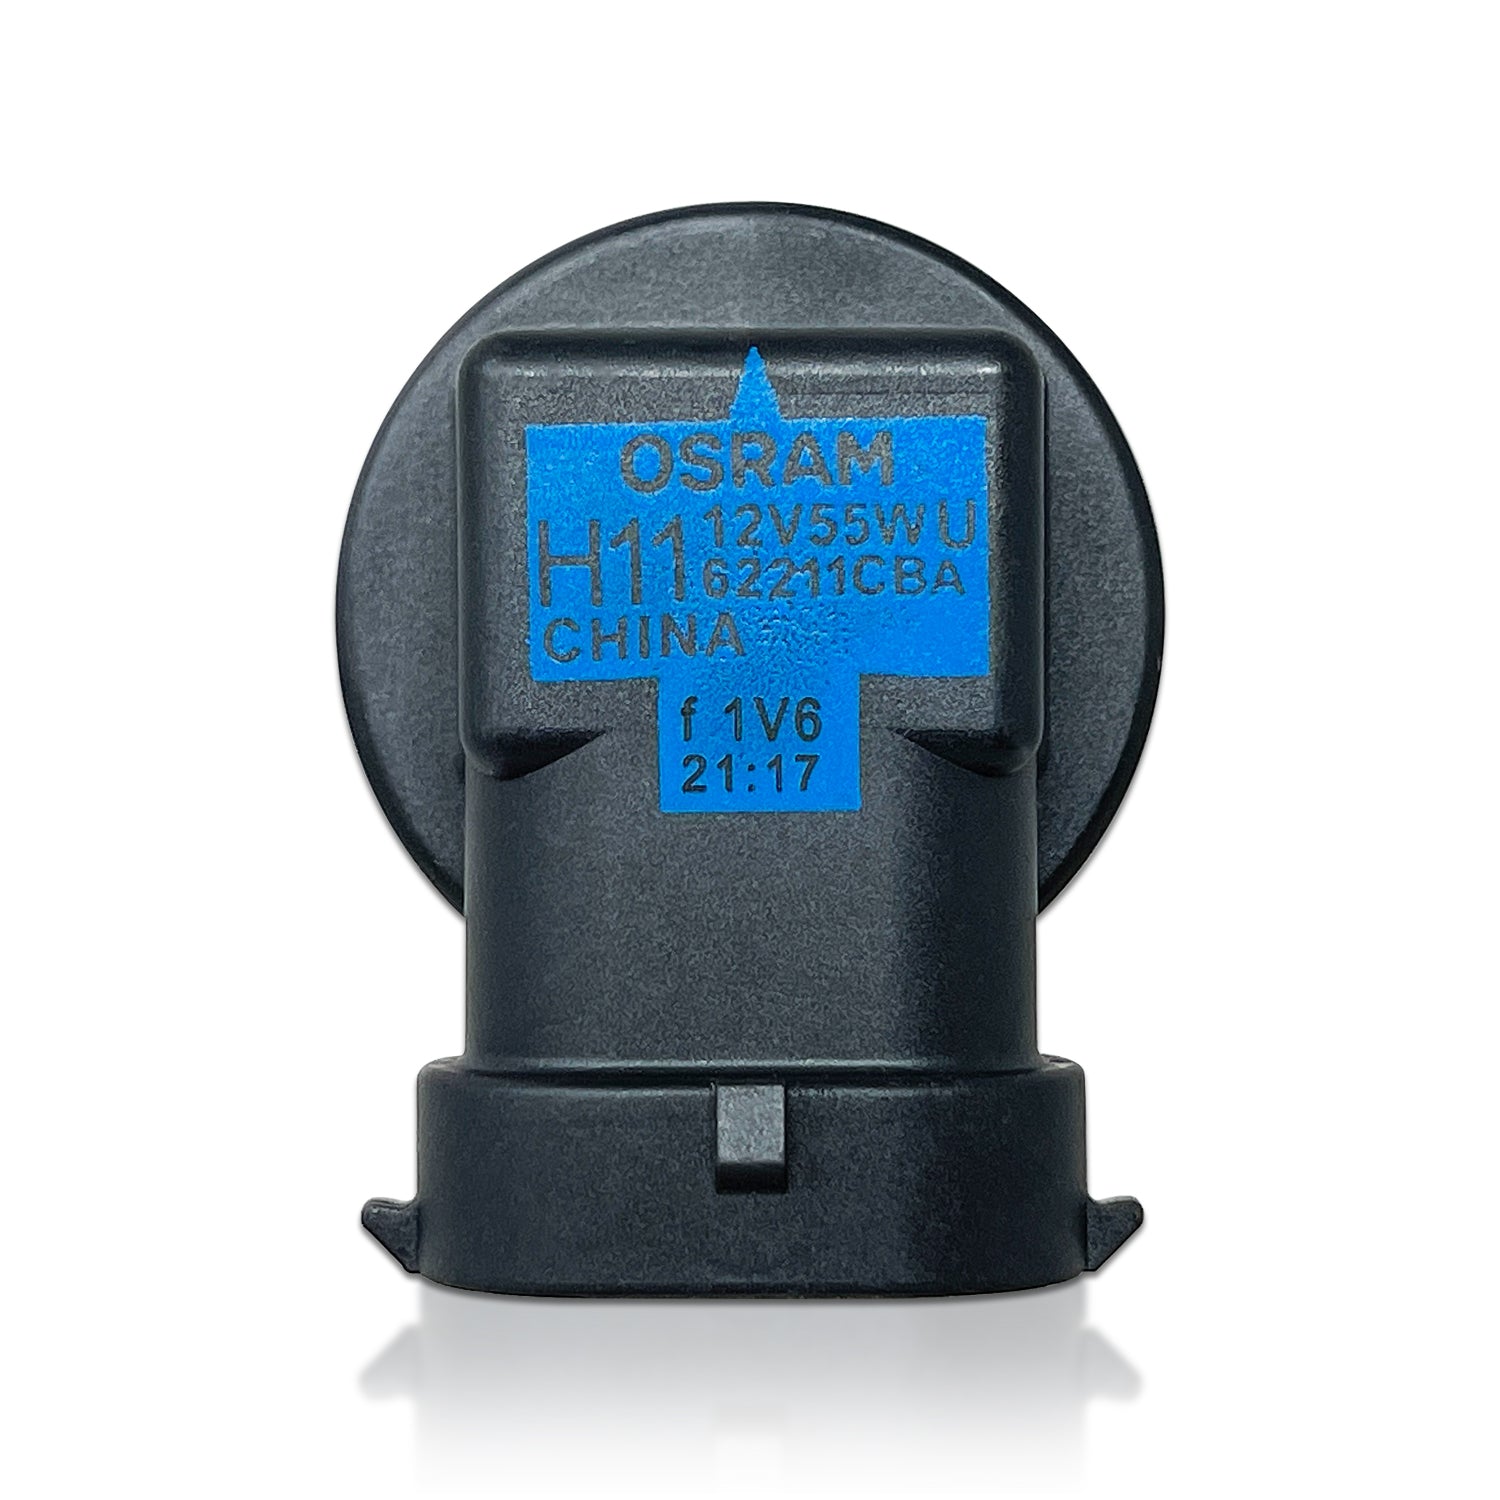 Osram H11 Cool Blue Advance Halogen Bulbs 5000K 62211CBA | Pack of 2